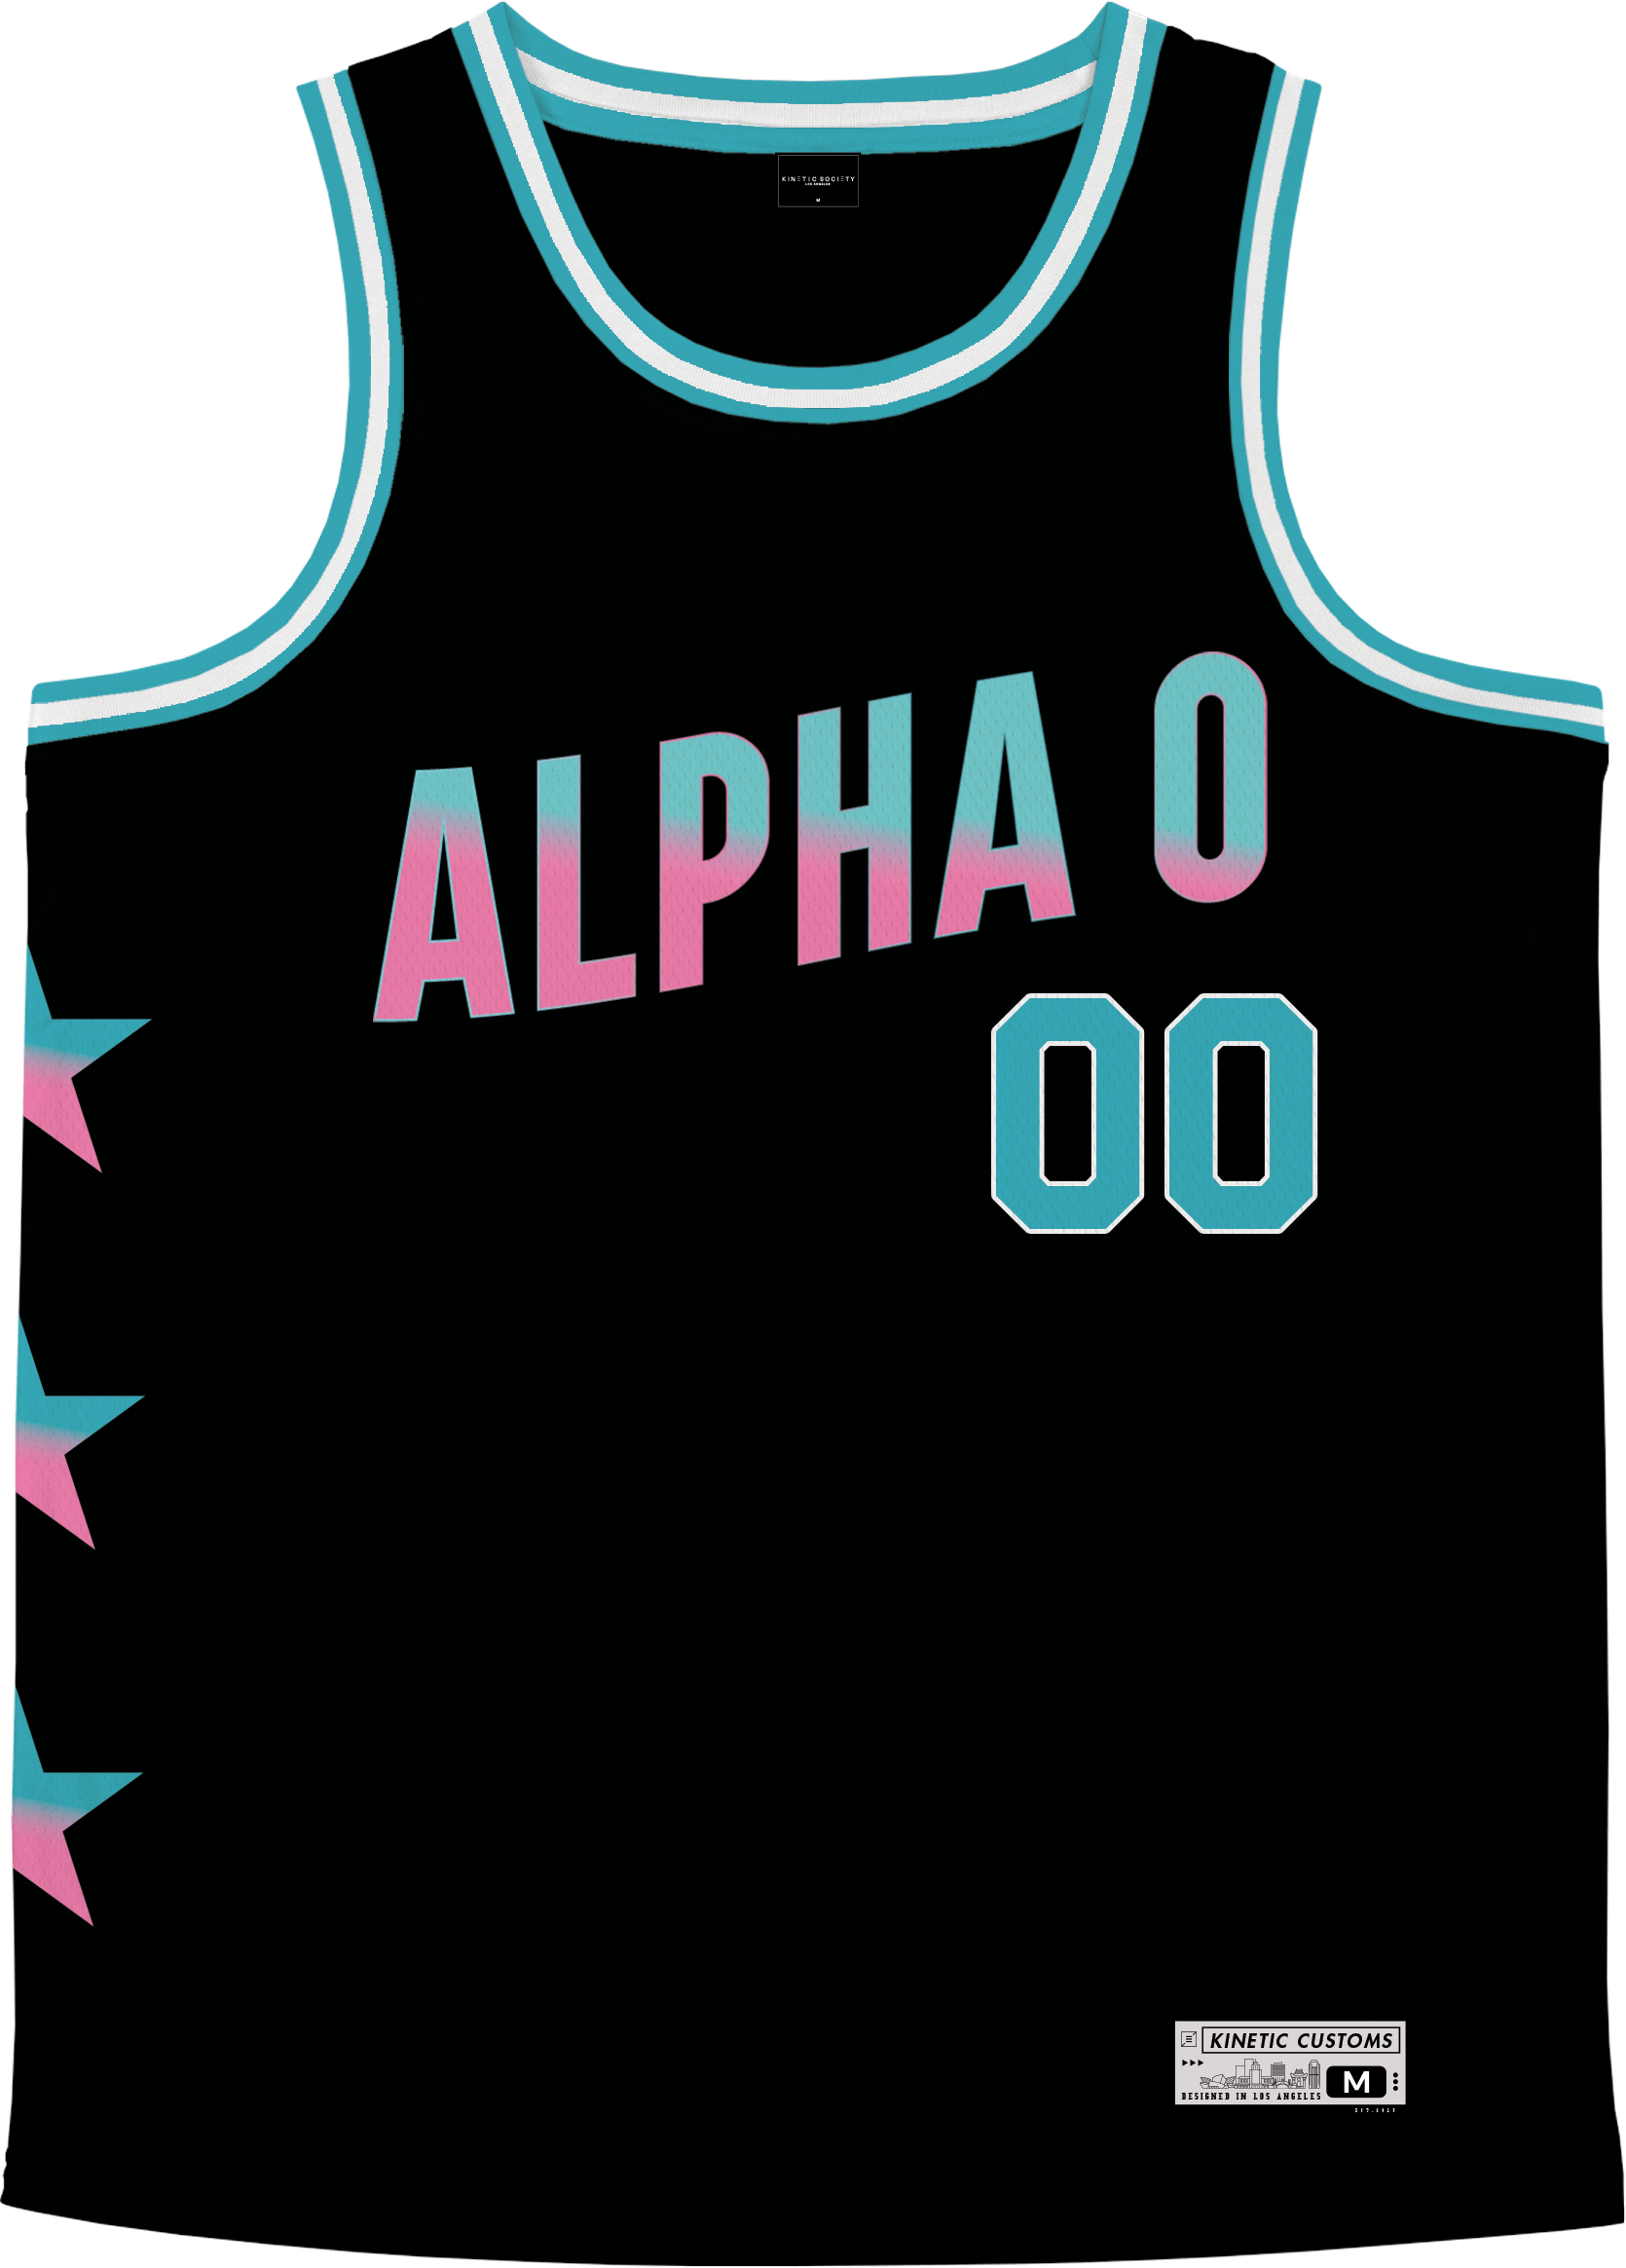 Alpha Omicron Pi - Cotton Candy Basketball Jersey - Kinetic Society